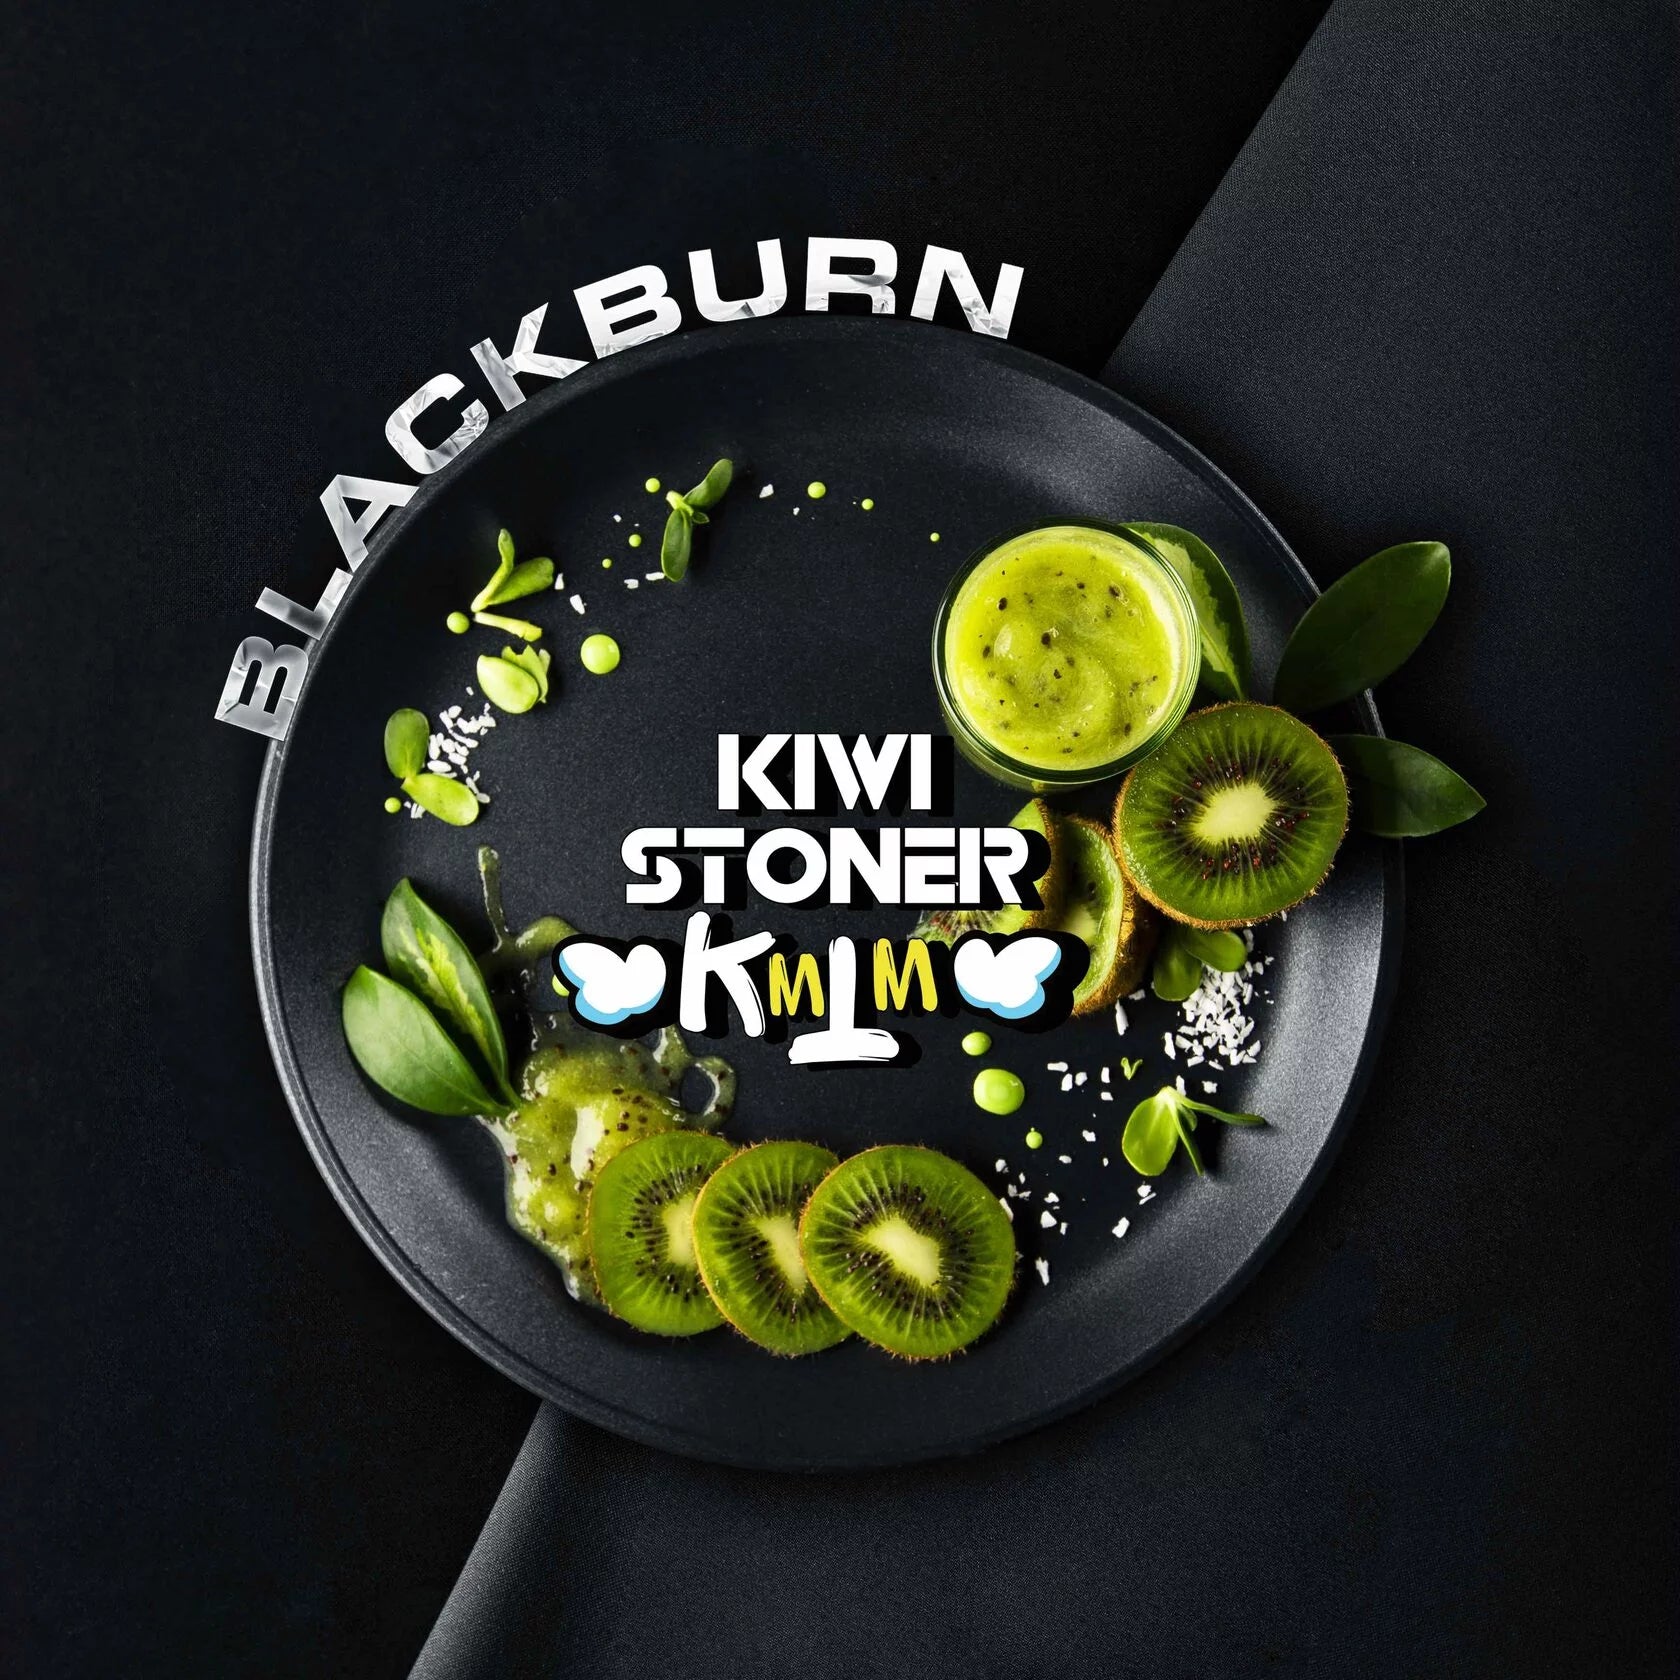 Blackburn Kiwi Stoner hookah tobacco flavor